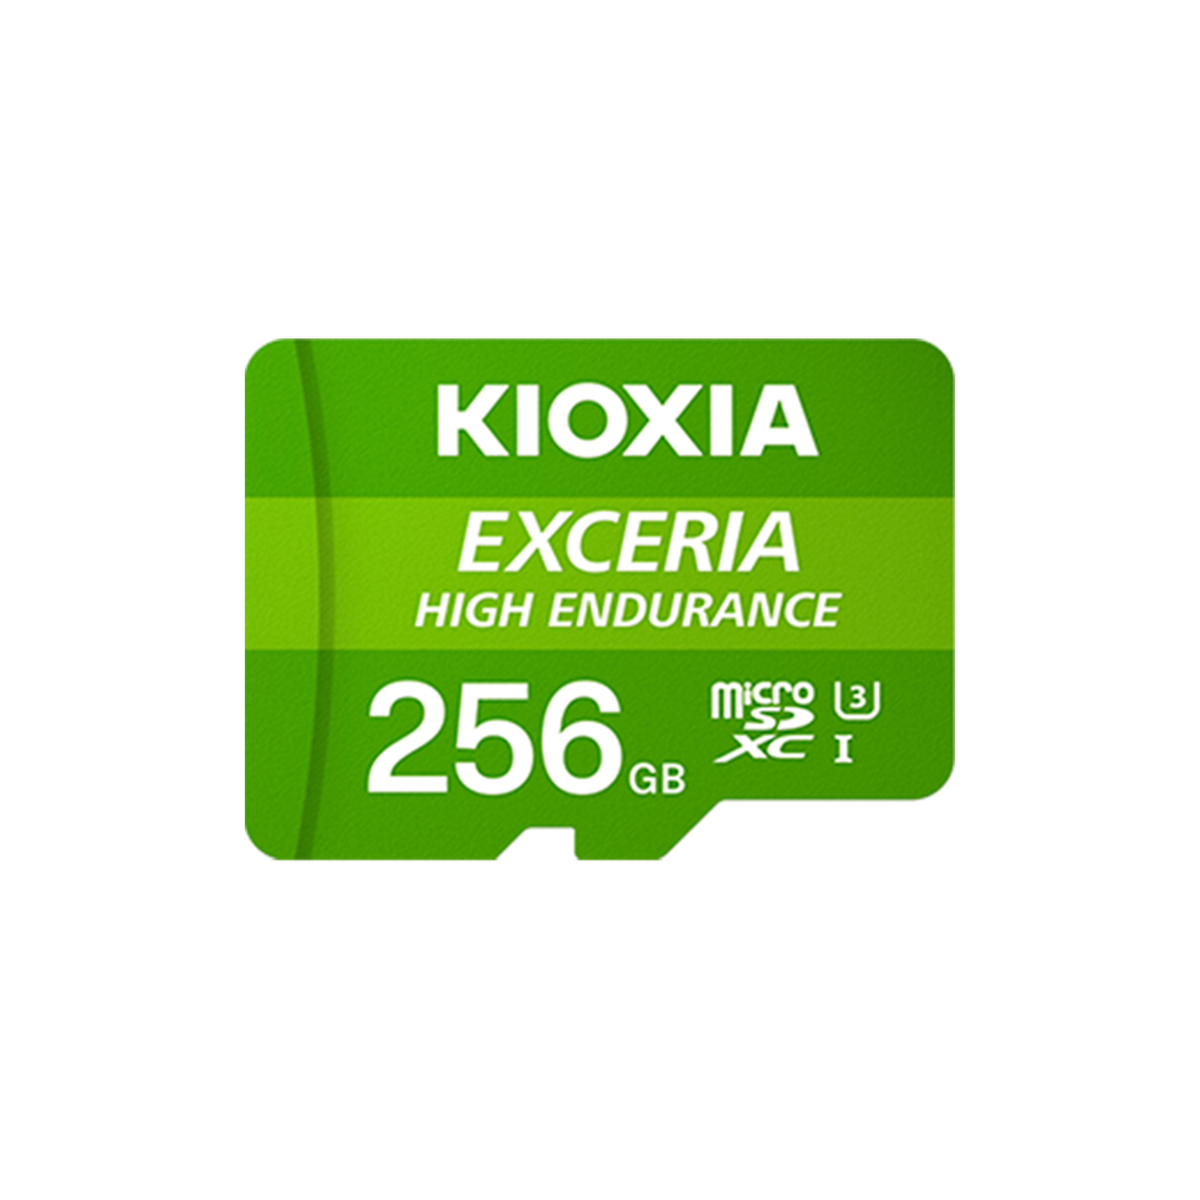 Kioxia U3 microSD Exceria High Endurance Flash Memory Card LMHE1G 256GB